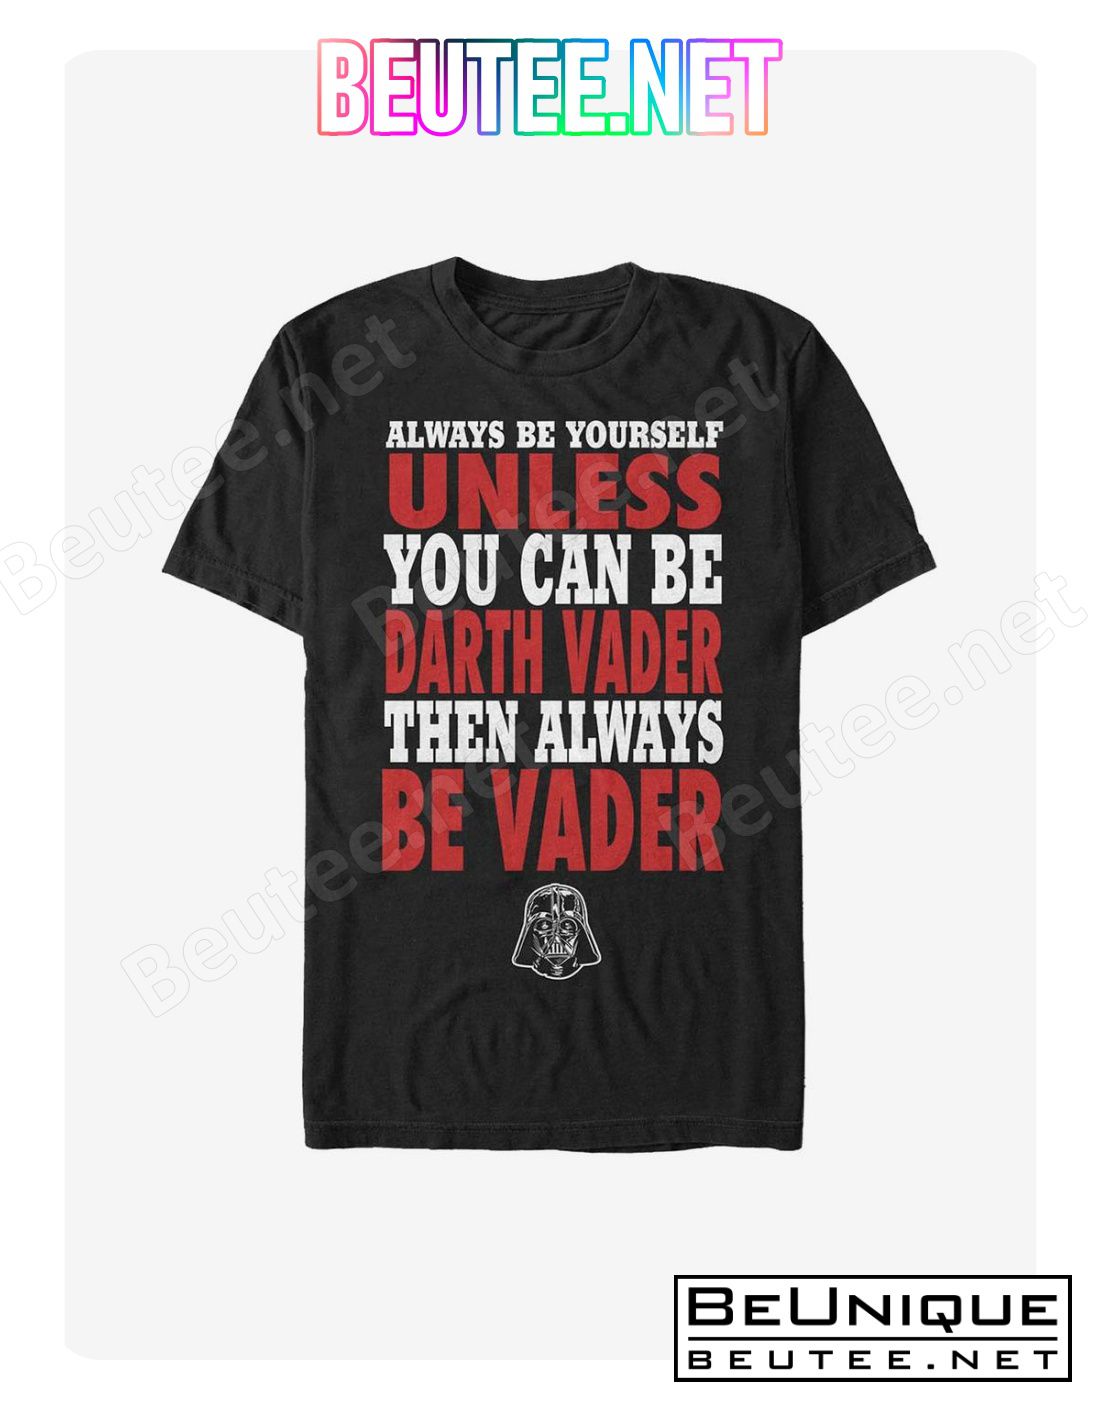 Star Wars Always Be Vader T-Shirt